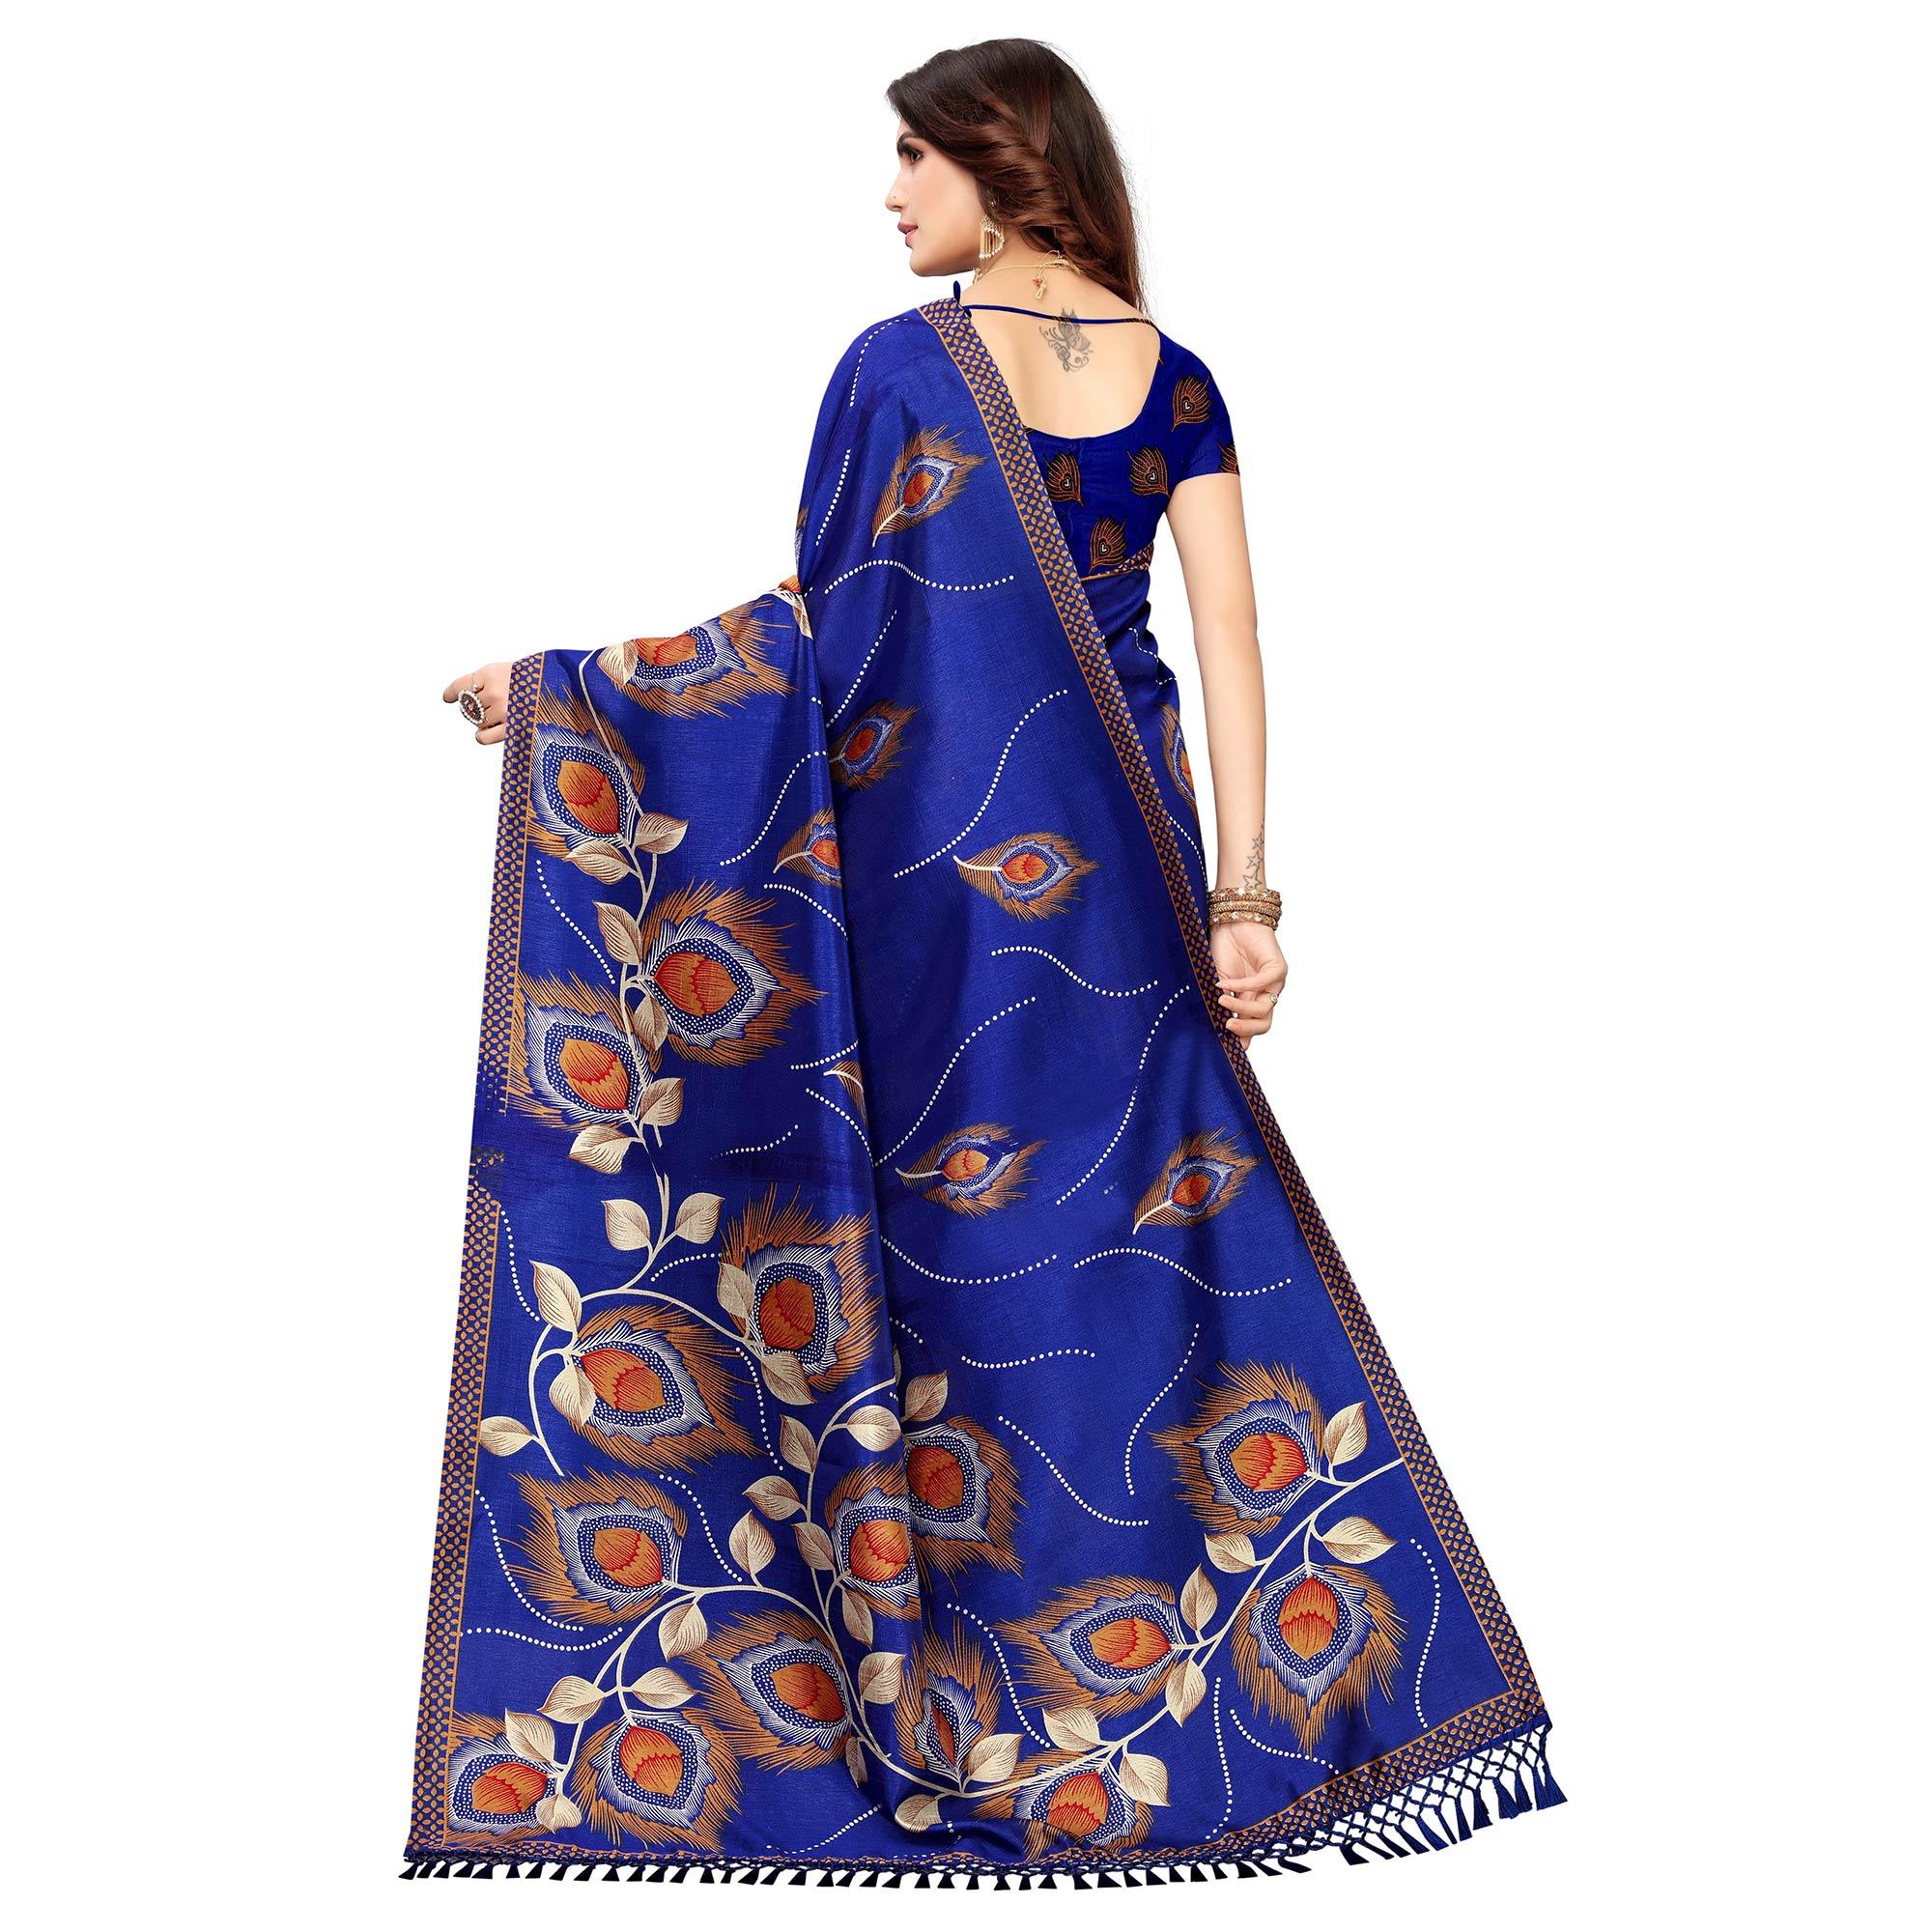 Mesmerising Blue Colored Festive Wear Printed Art Silk Saree - Peachmode